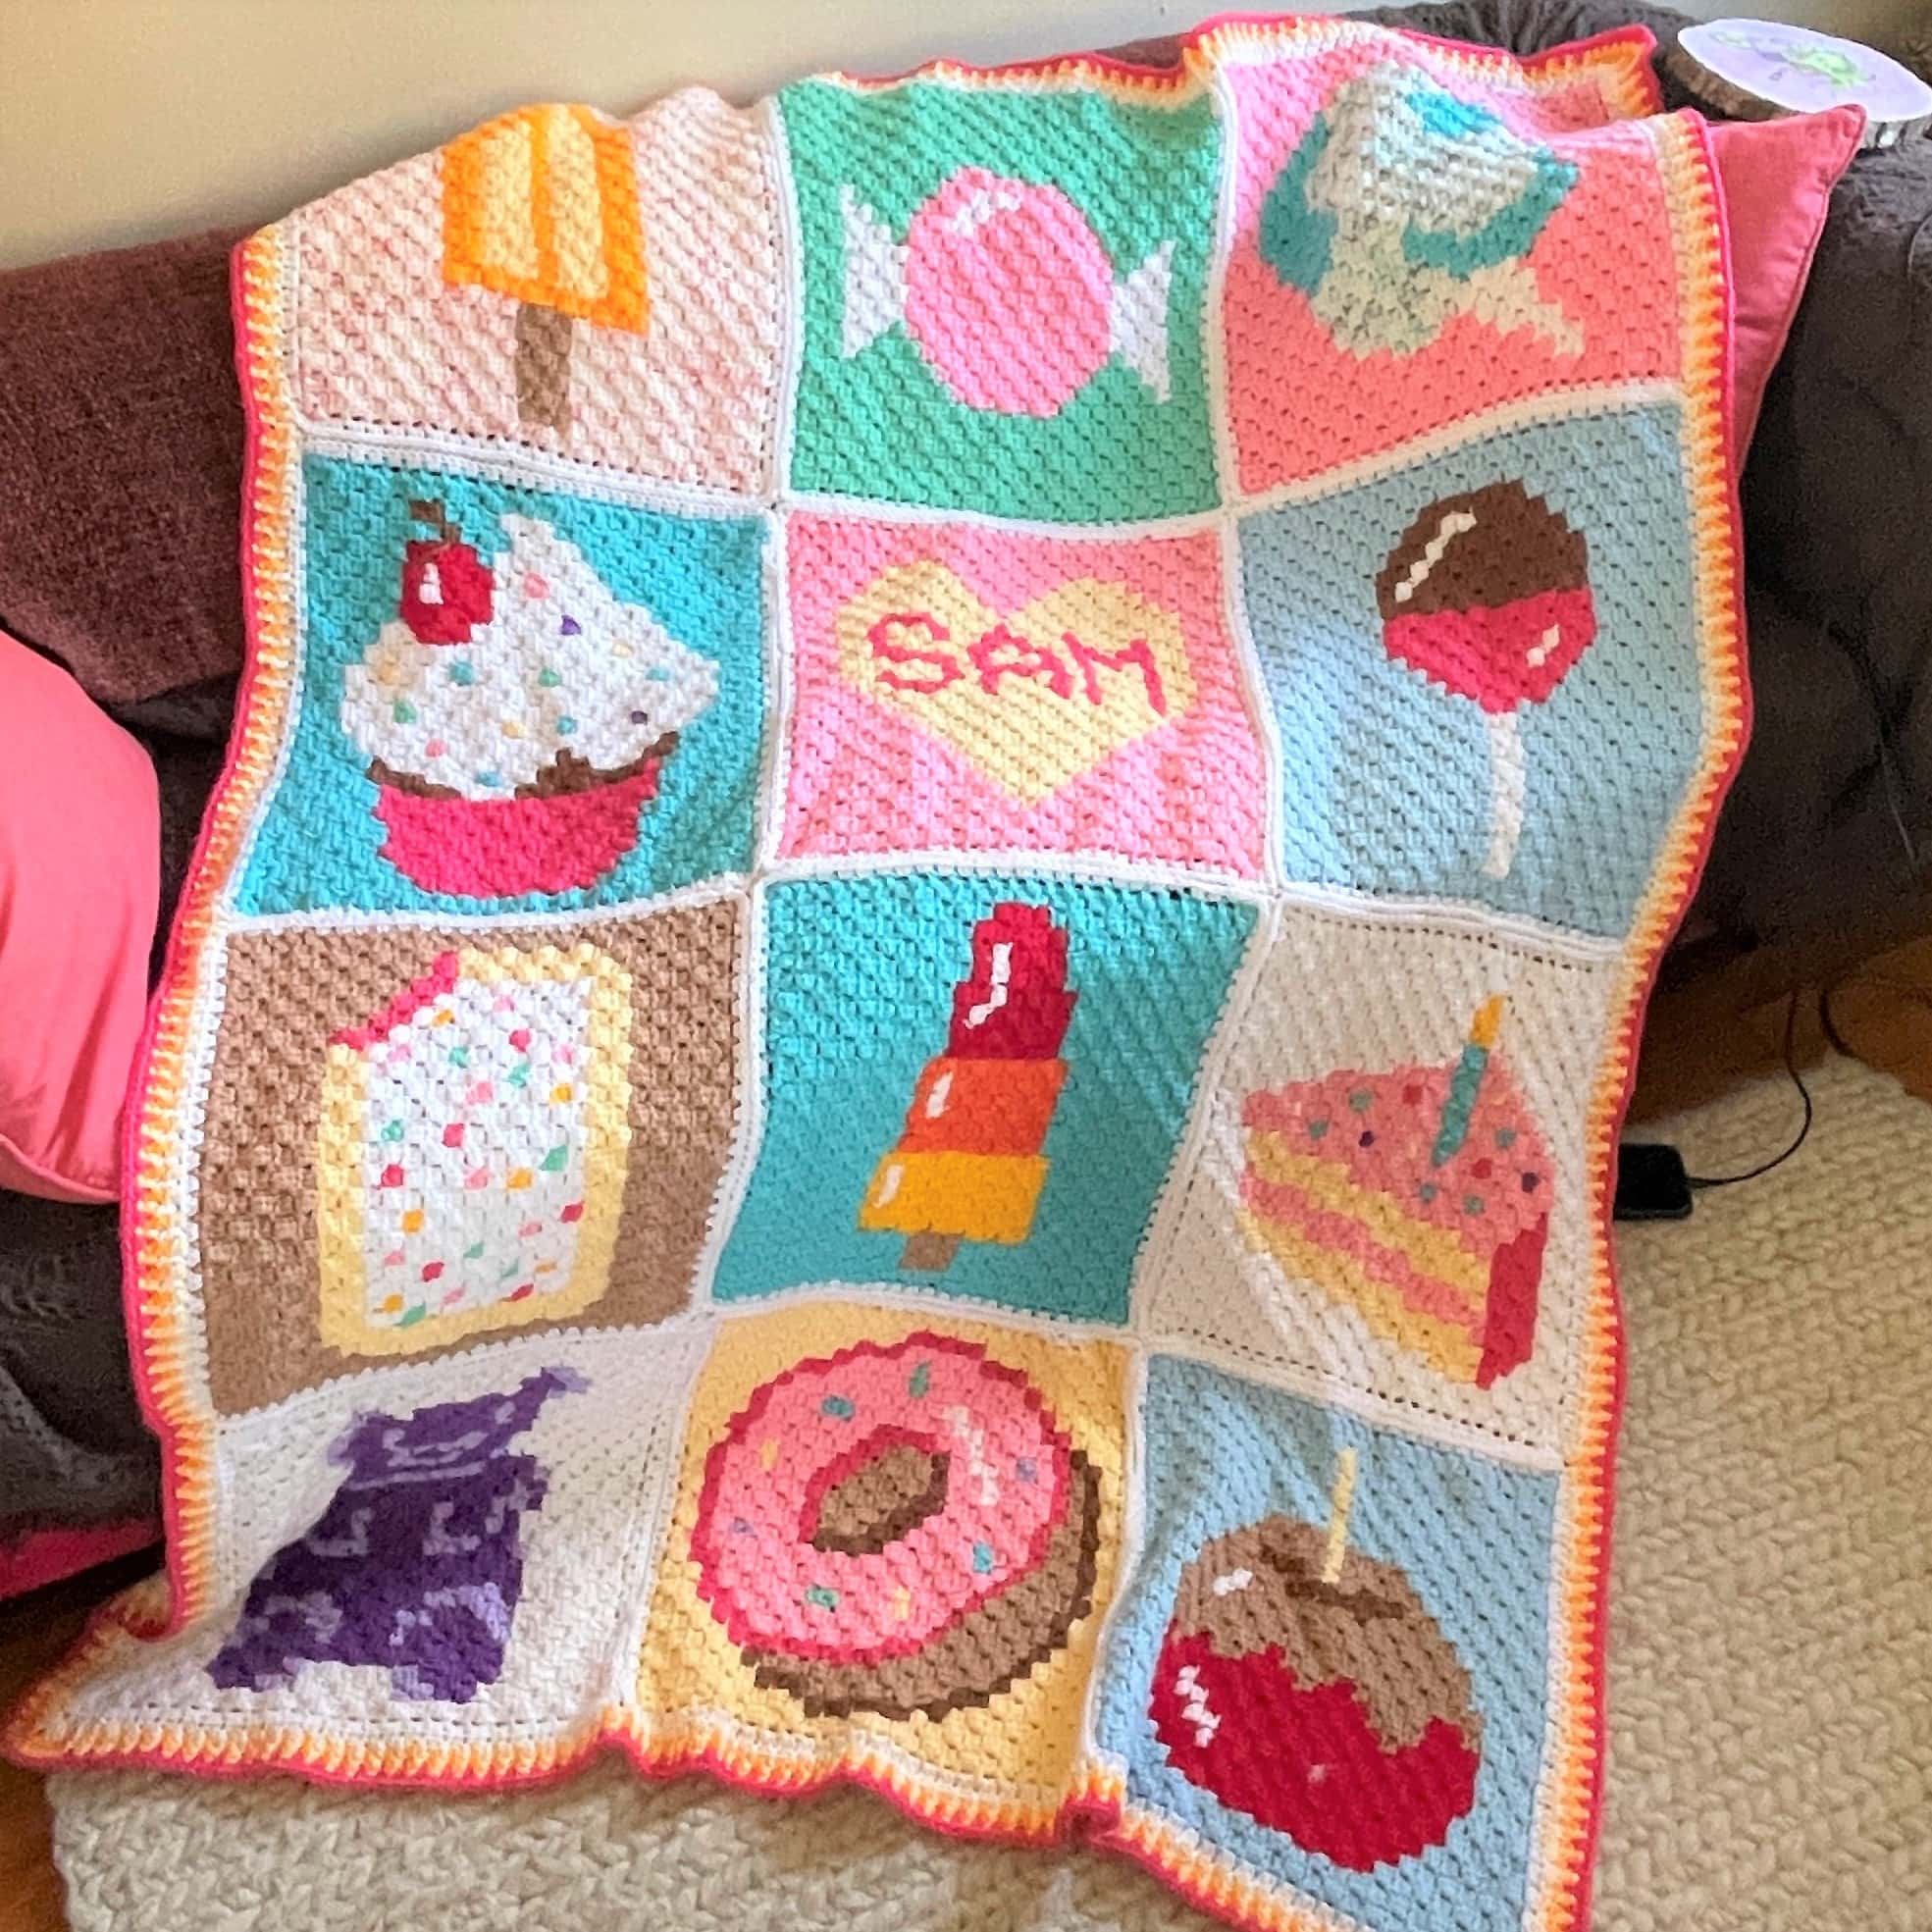 Sweet Treats blanket by Tasha A crochet story of kindness